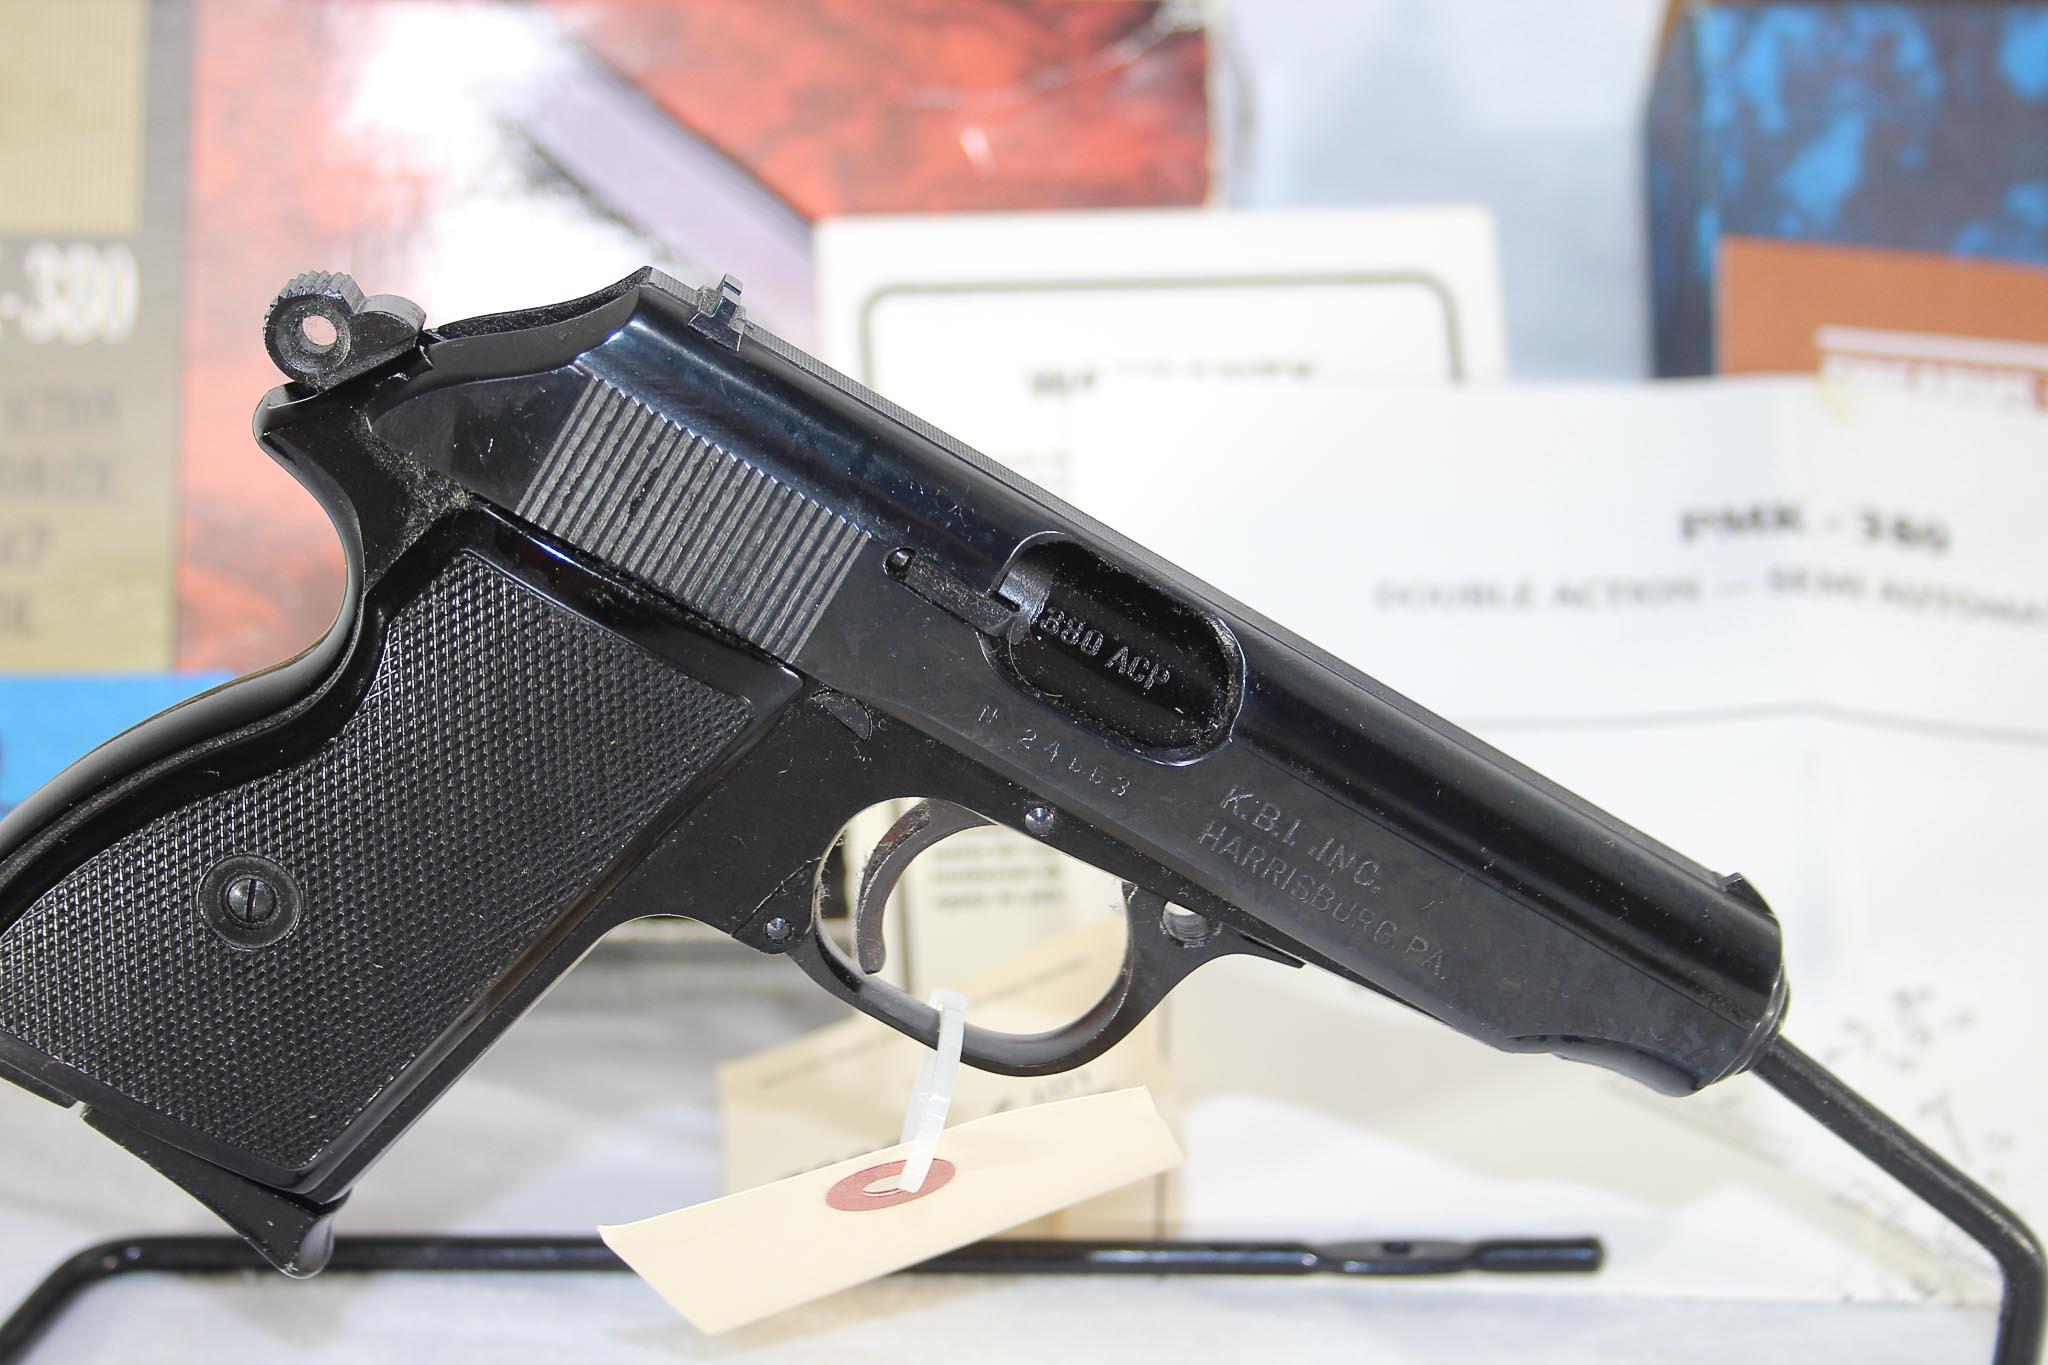 KBI, Inc (FEG) PMK-380 pistol